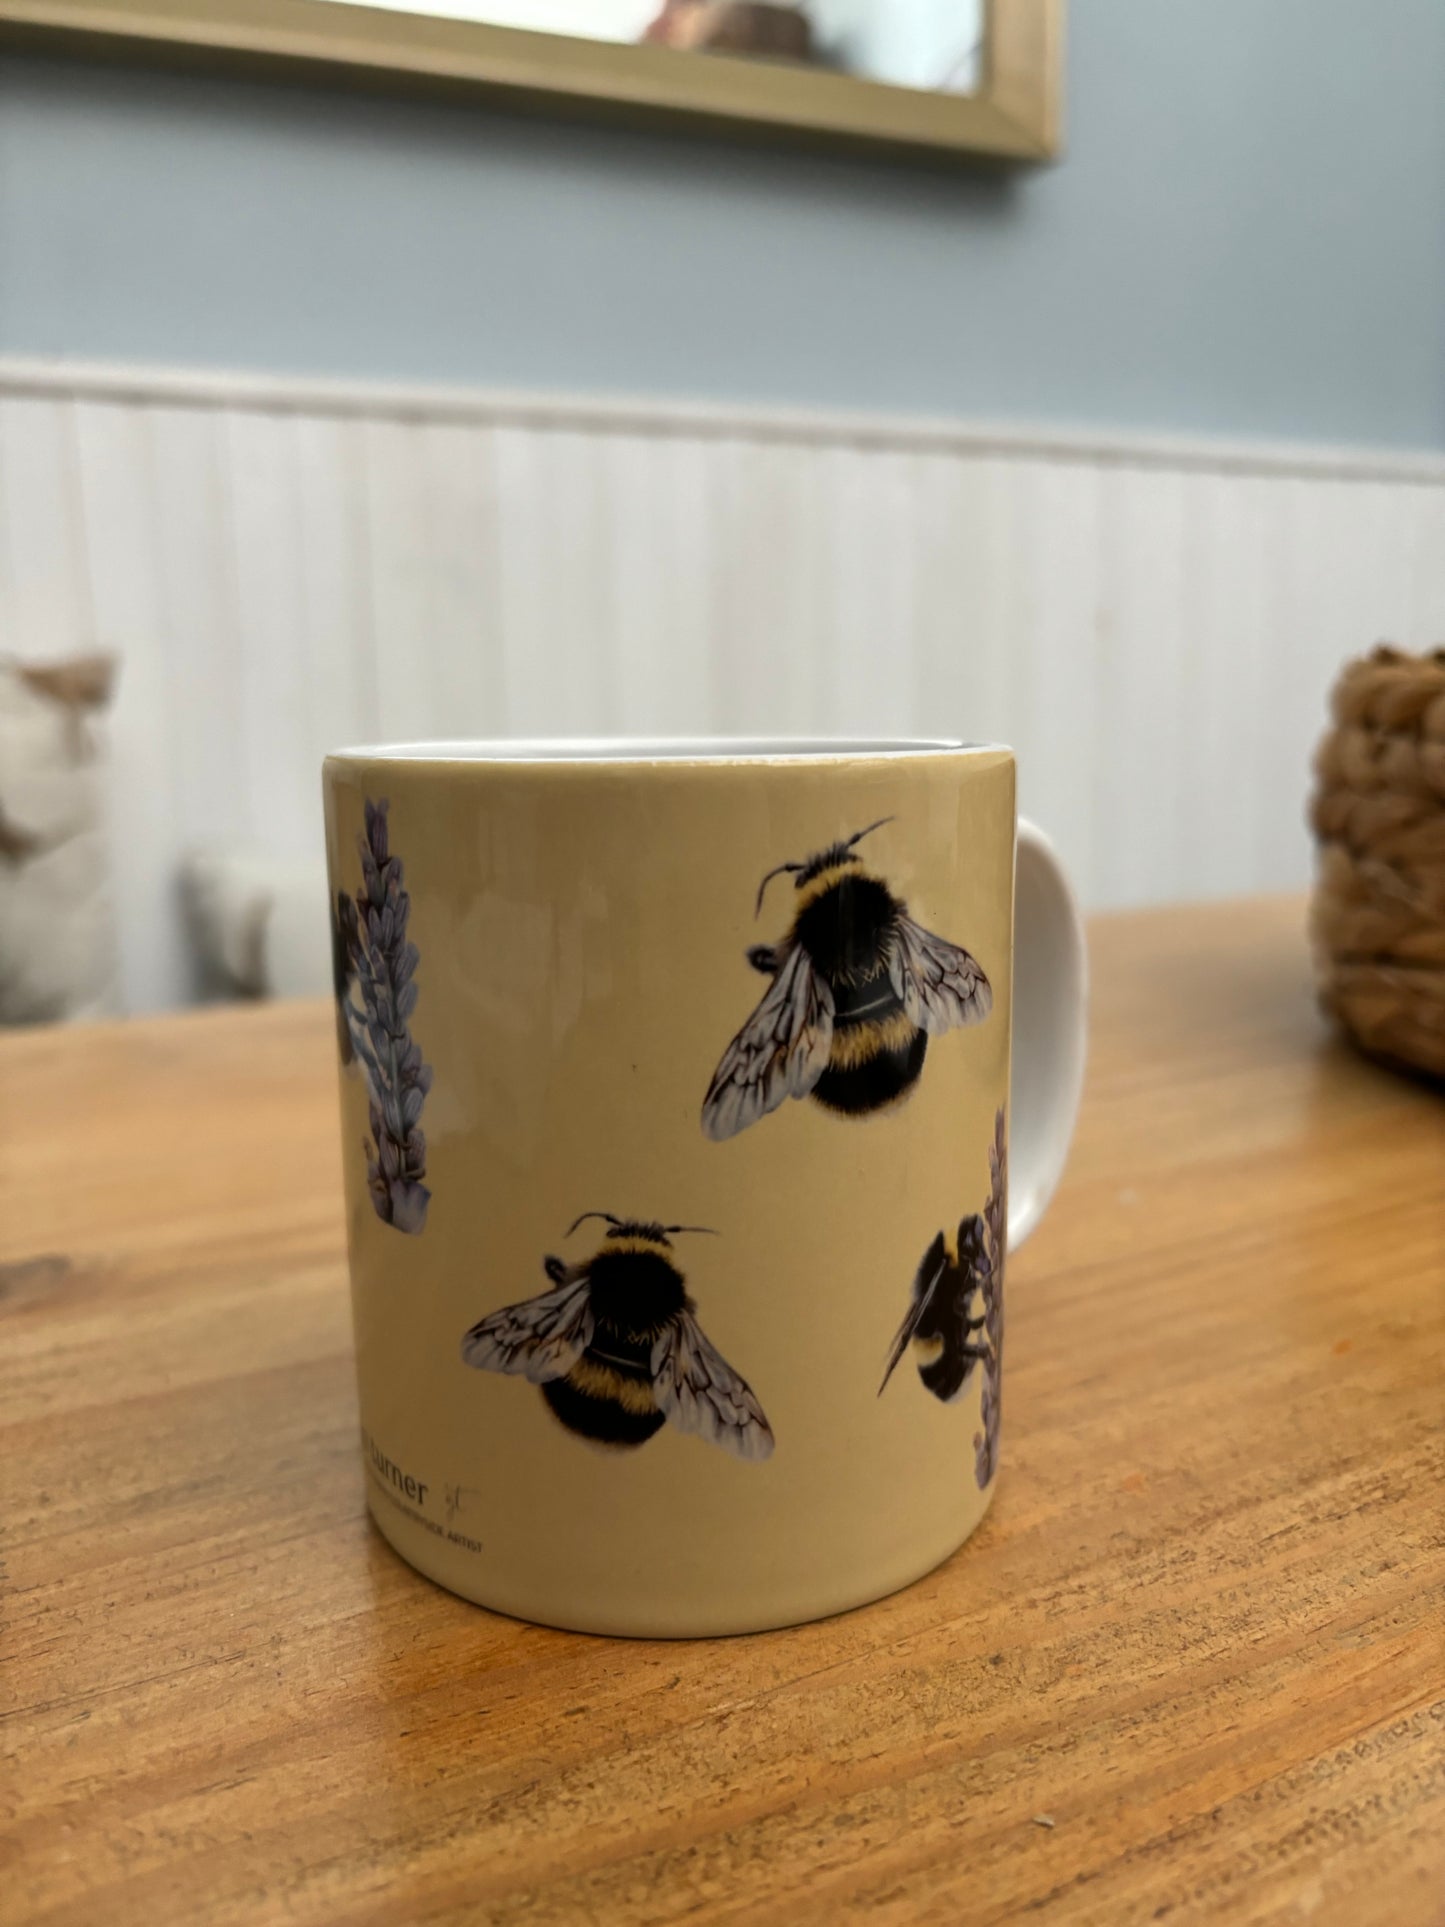 Bumble Bees Ceramic Mug